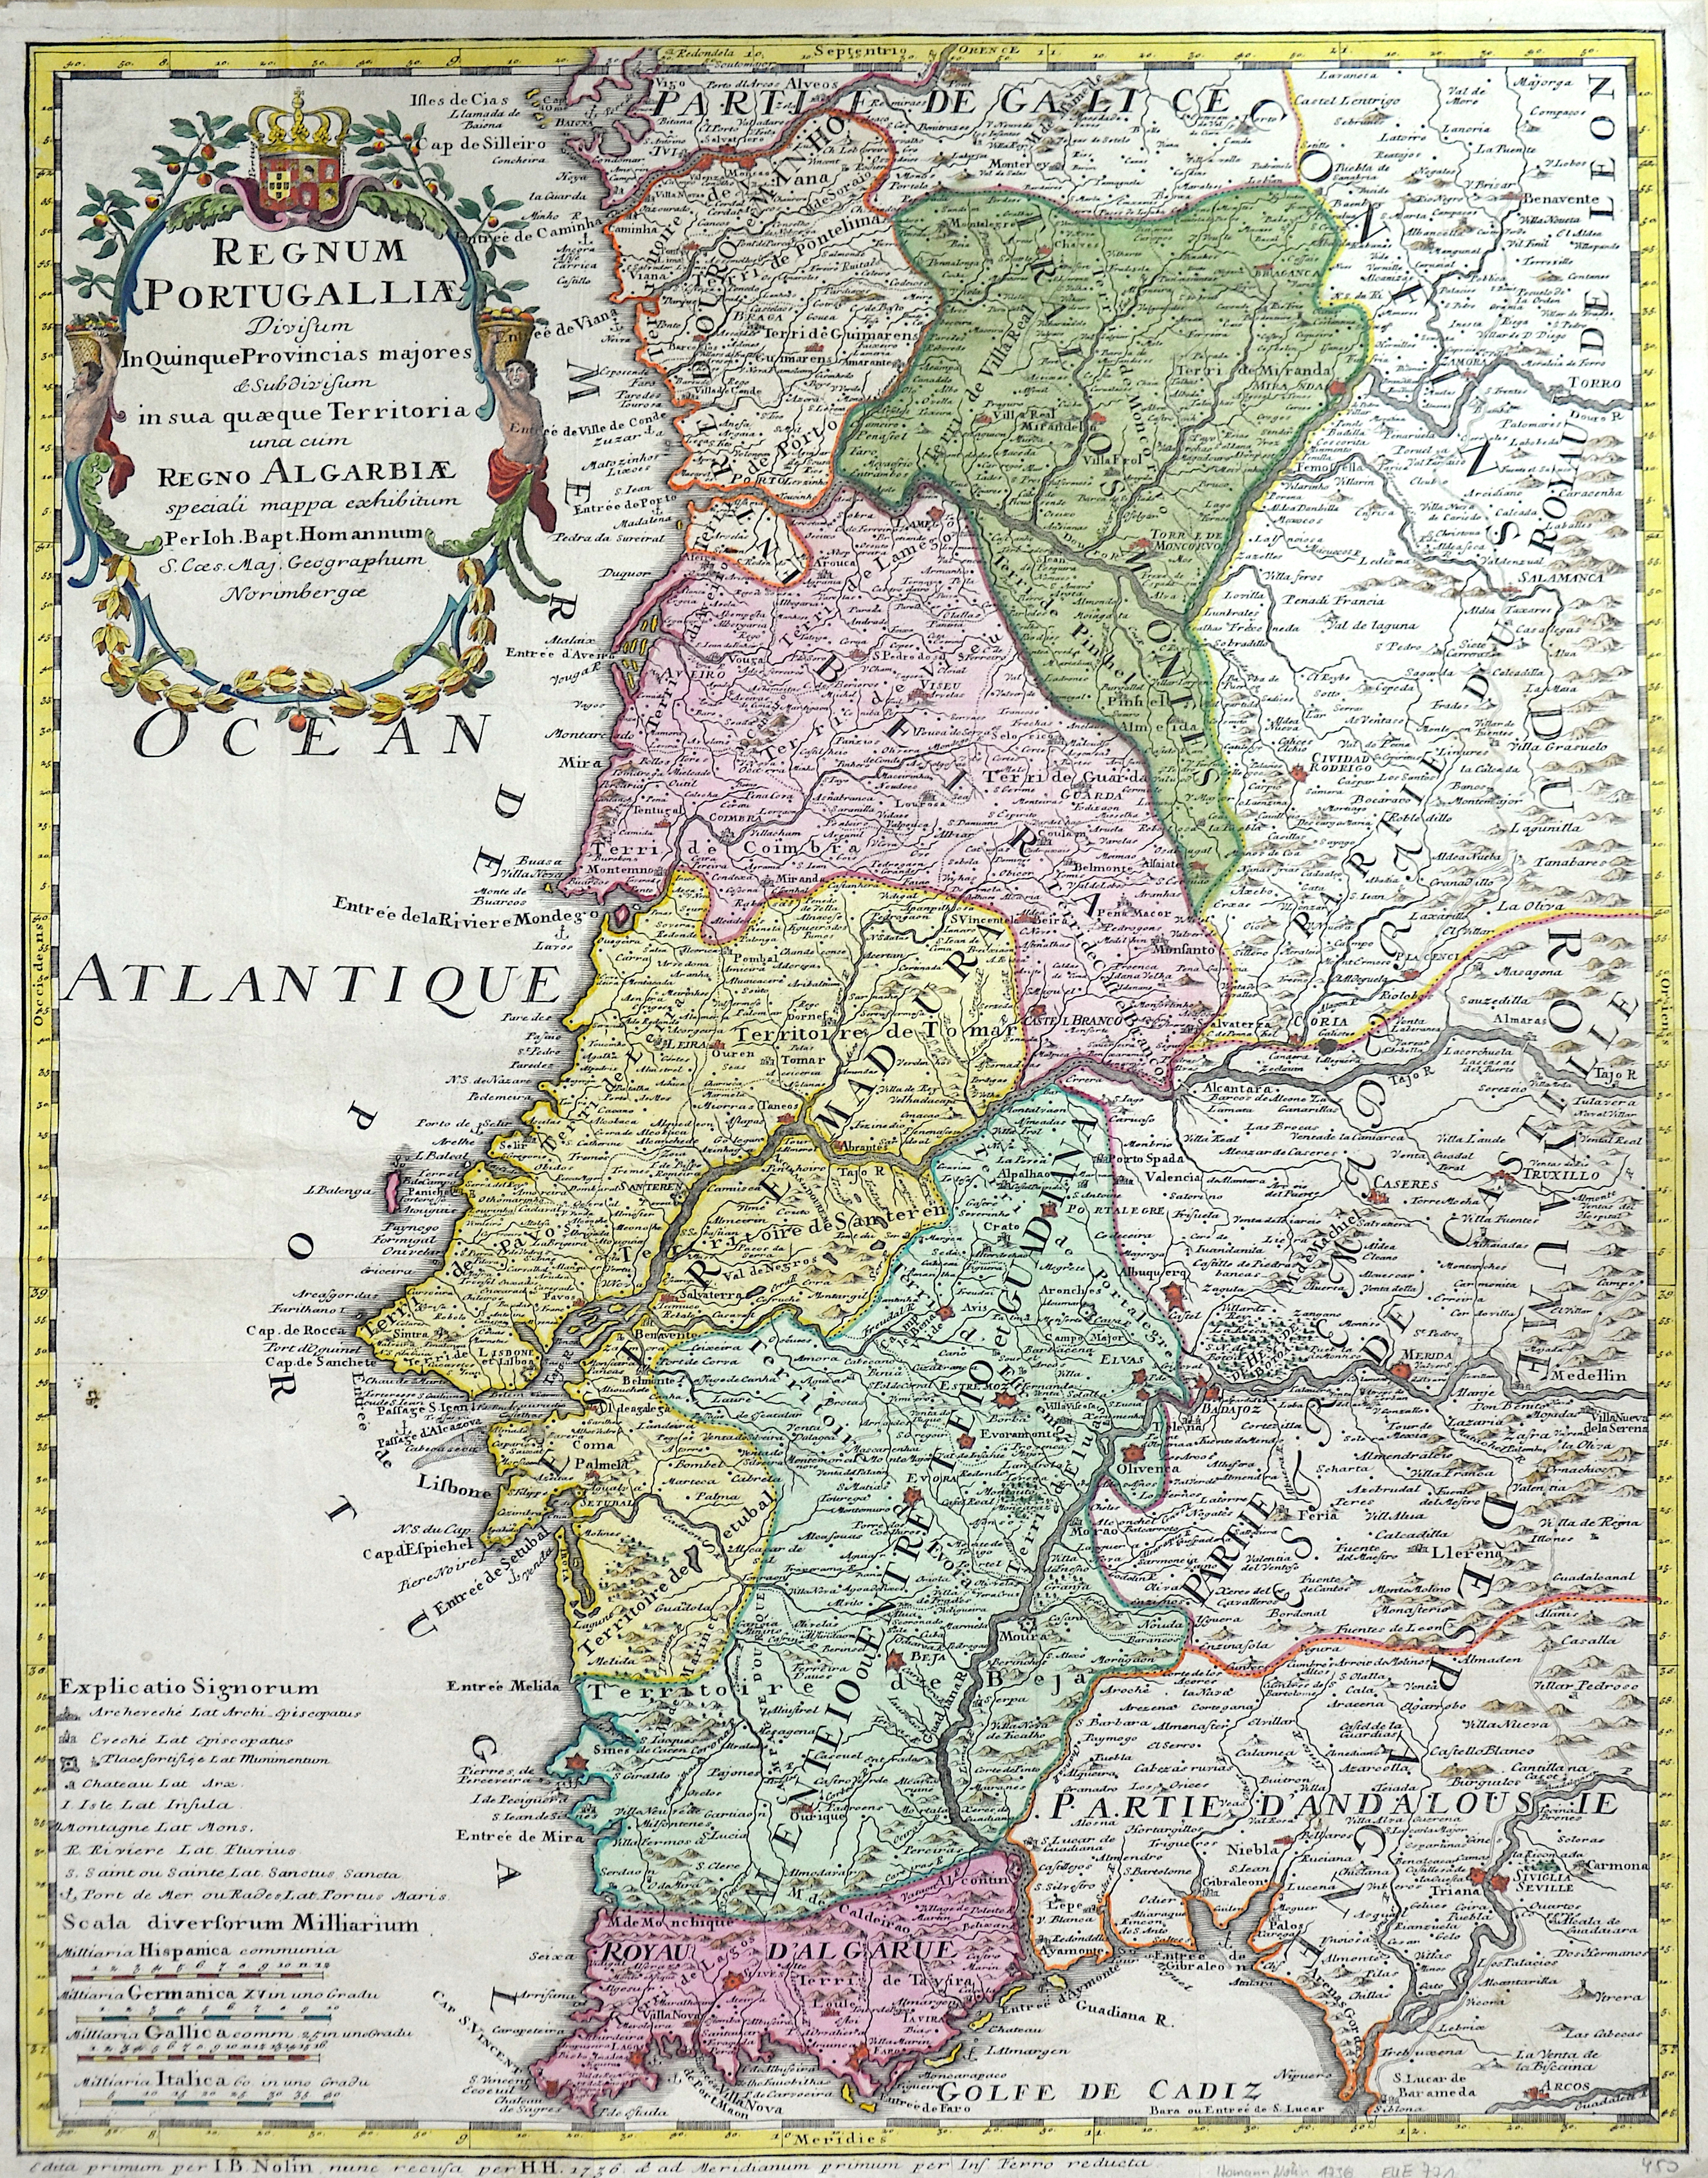 Homann Johann Babtiste Regnum Portugalliae divisum in Quinque Provincias majores…